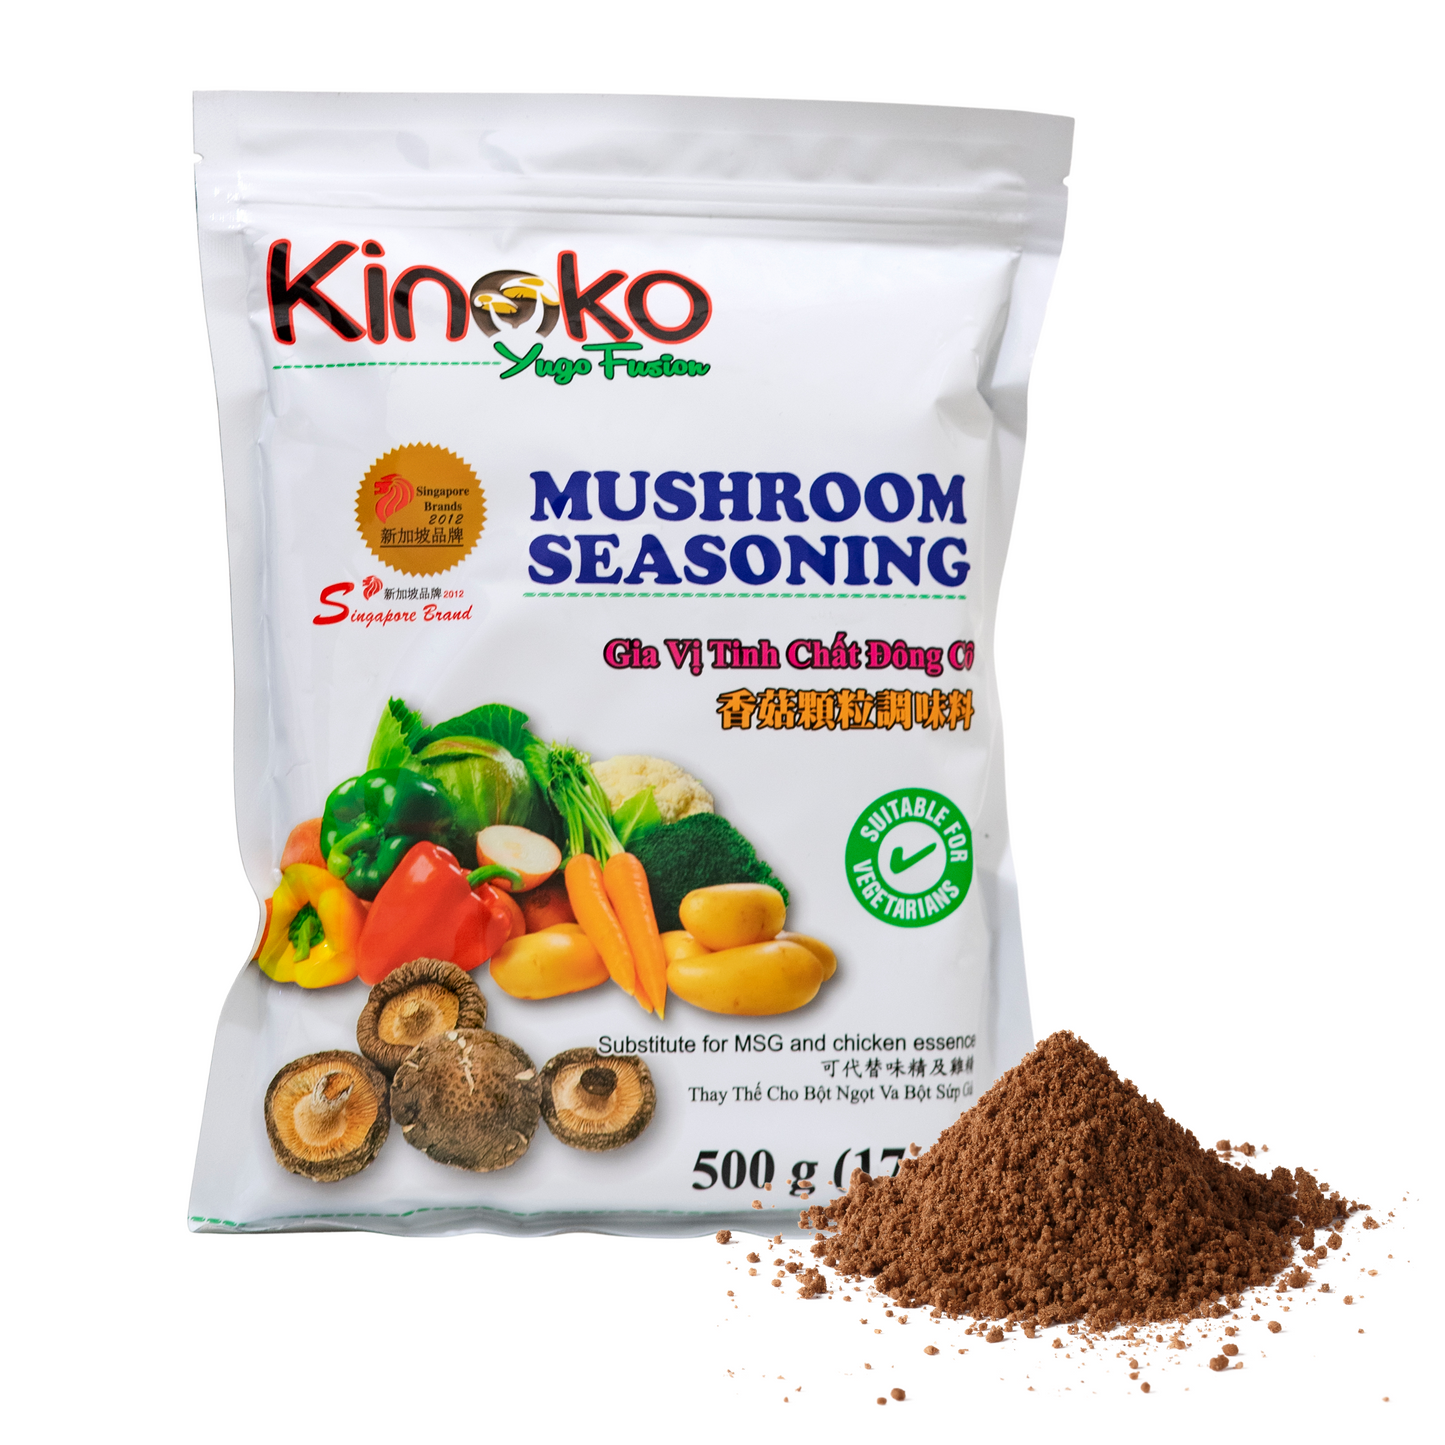 Kinoko Yugo Fusion Mushroom Seasoning 2 PACK